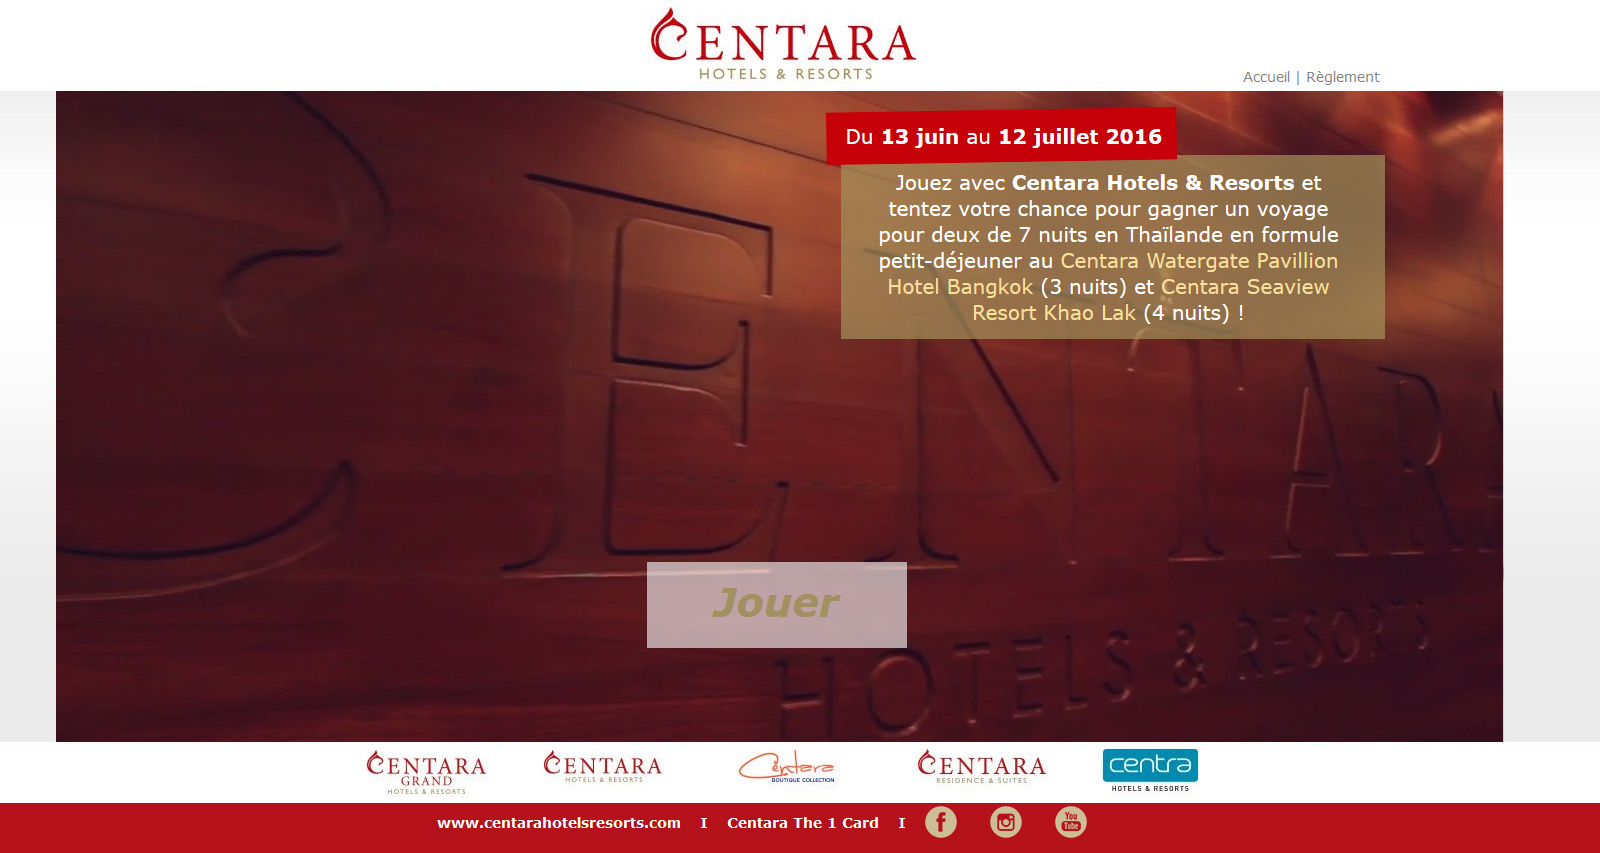 Le jeu concours Centara Hotels & Resorts - DR